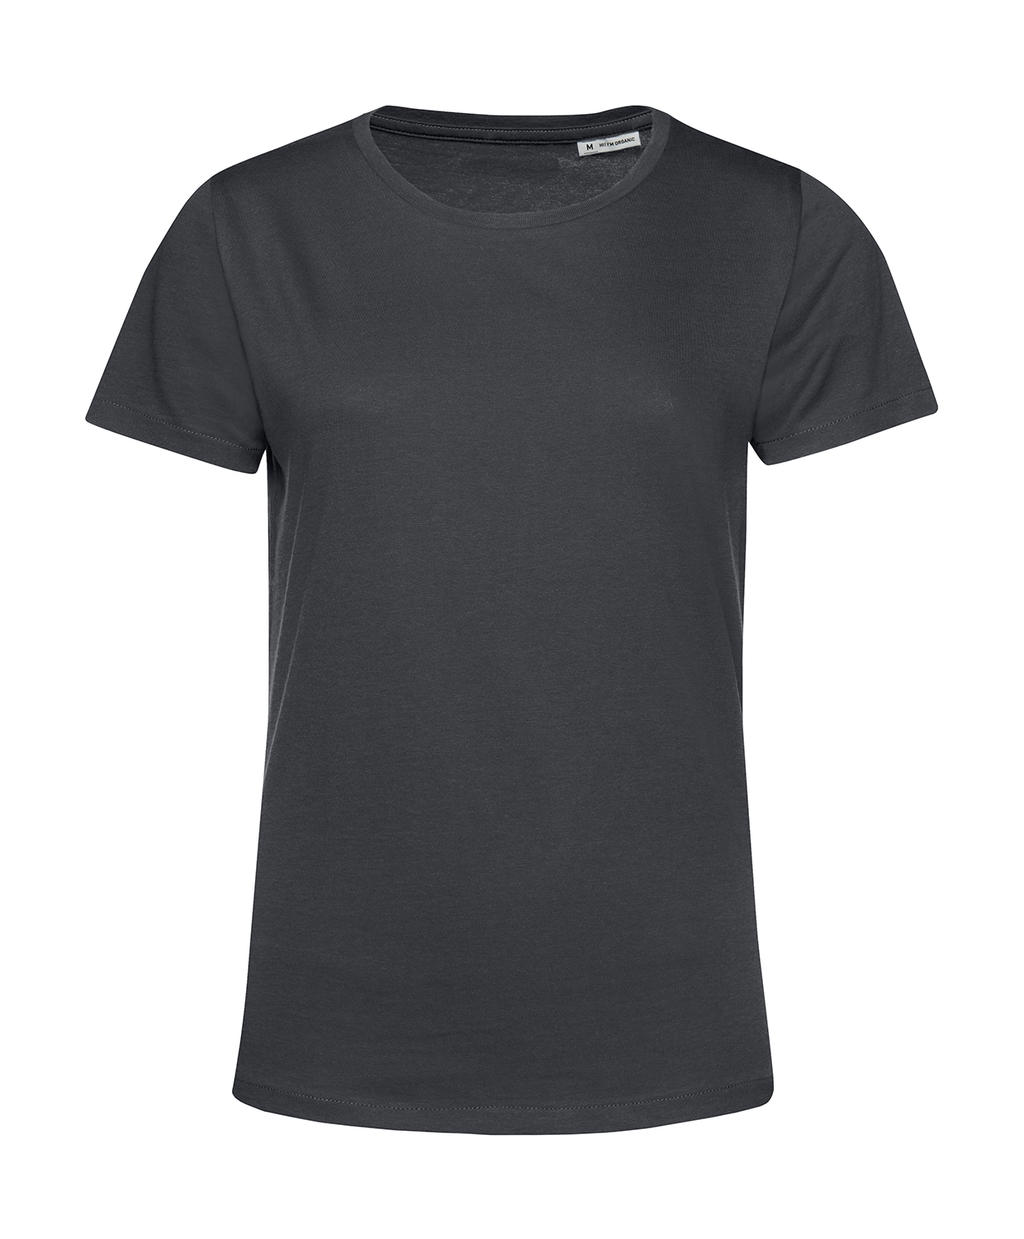 Tričko dámské BC Organic Inspire E150 - tmavě šedé, XL